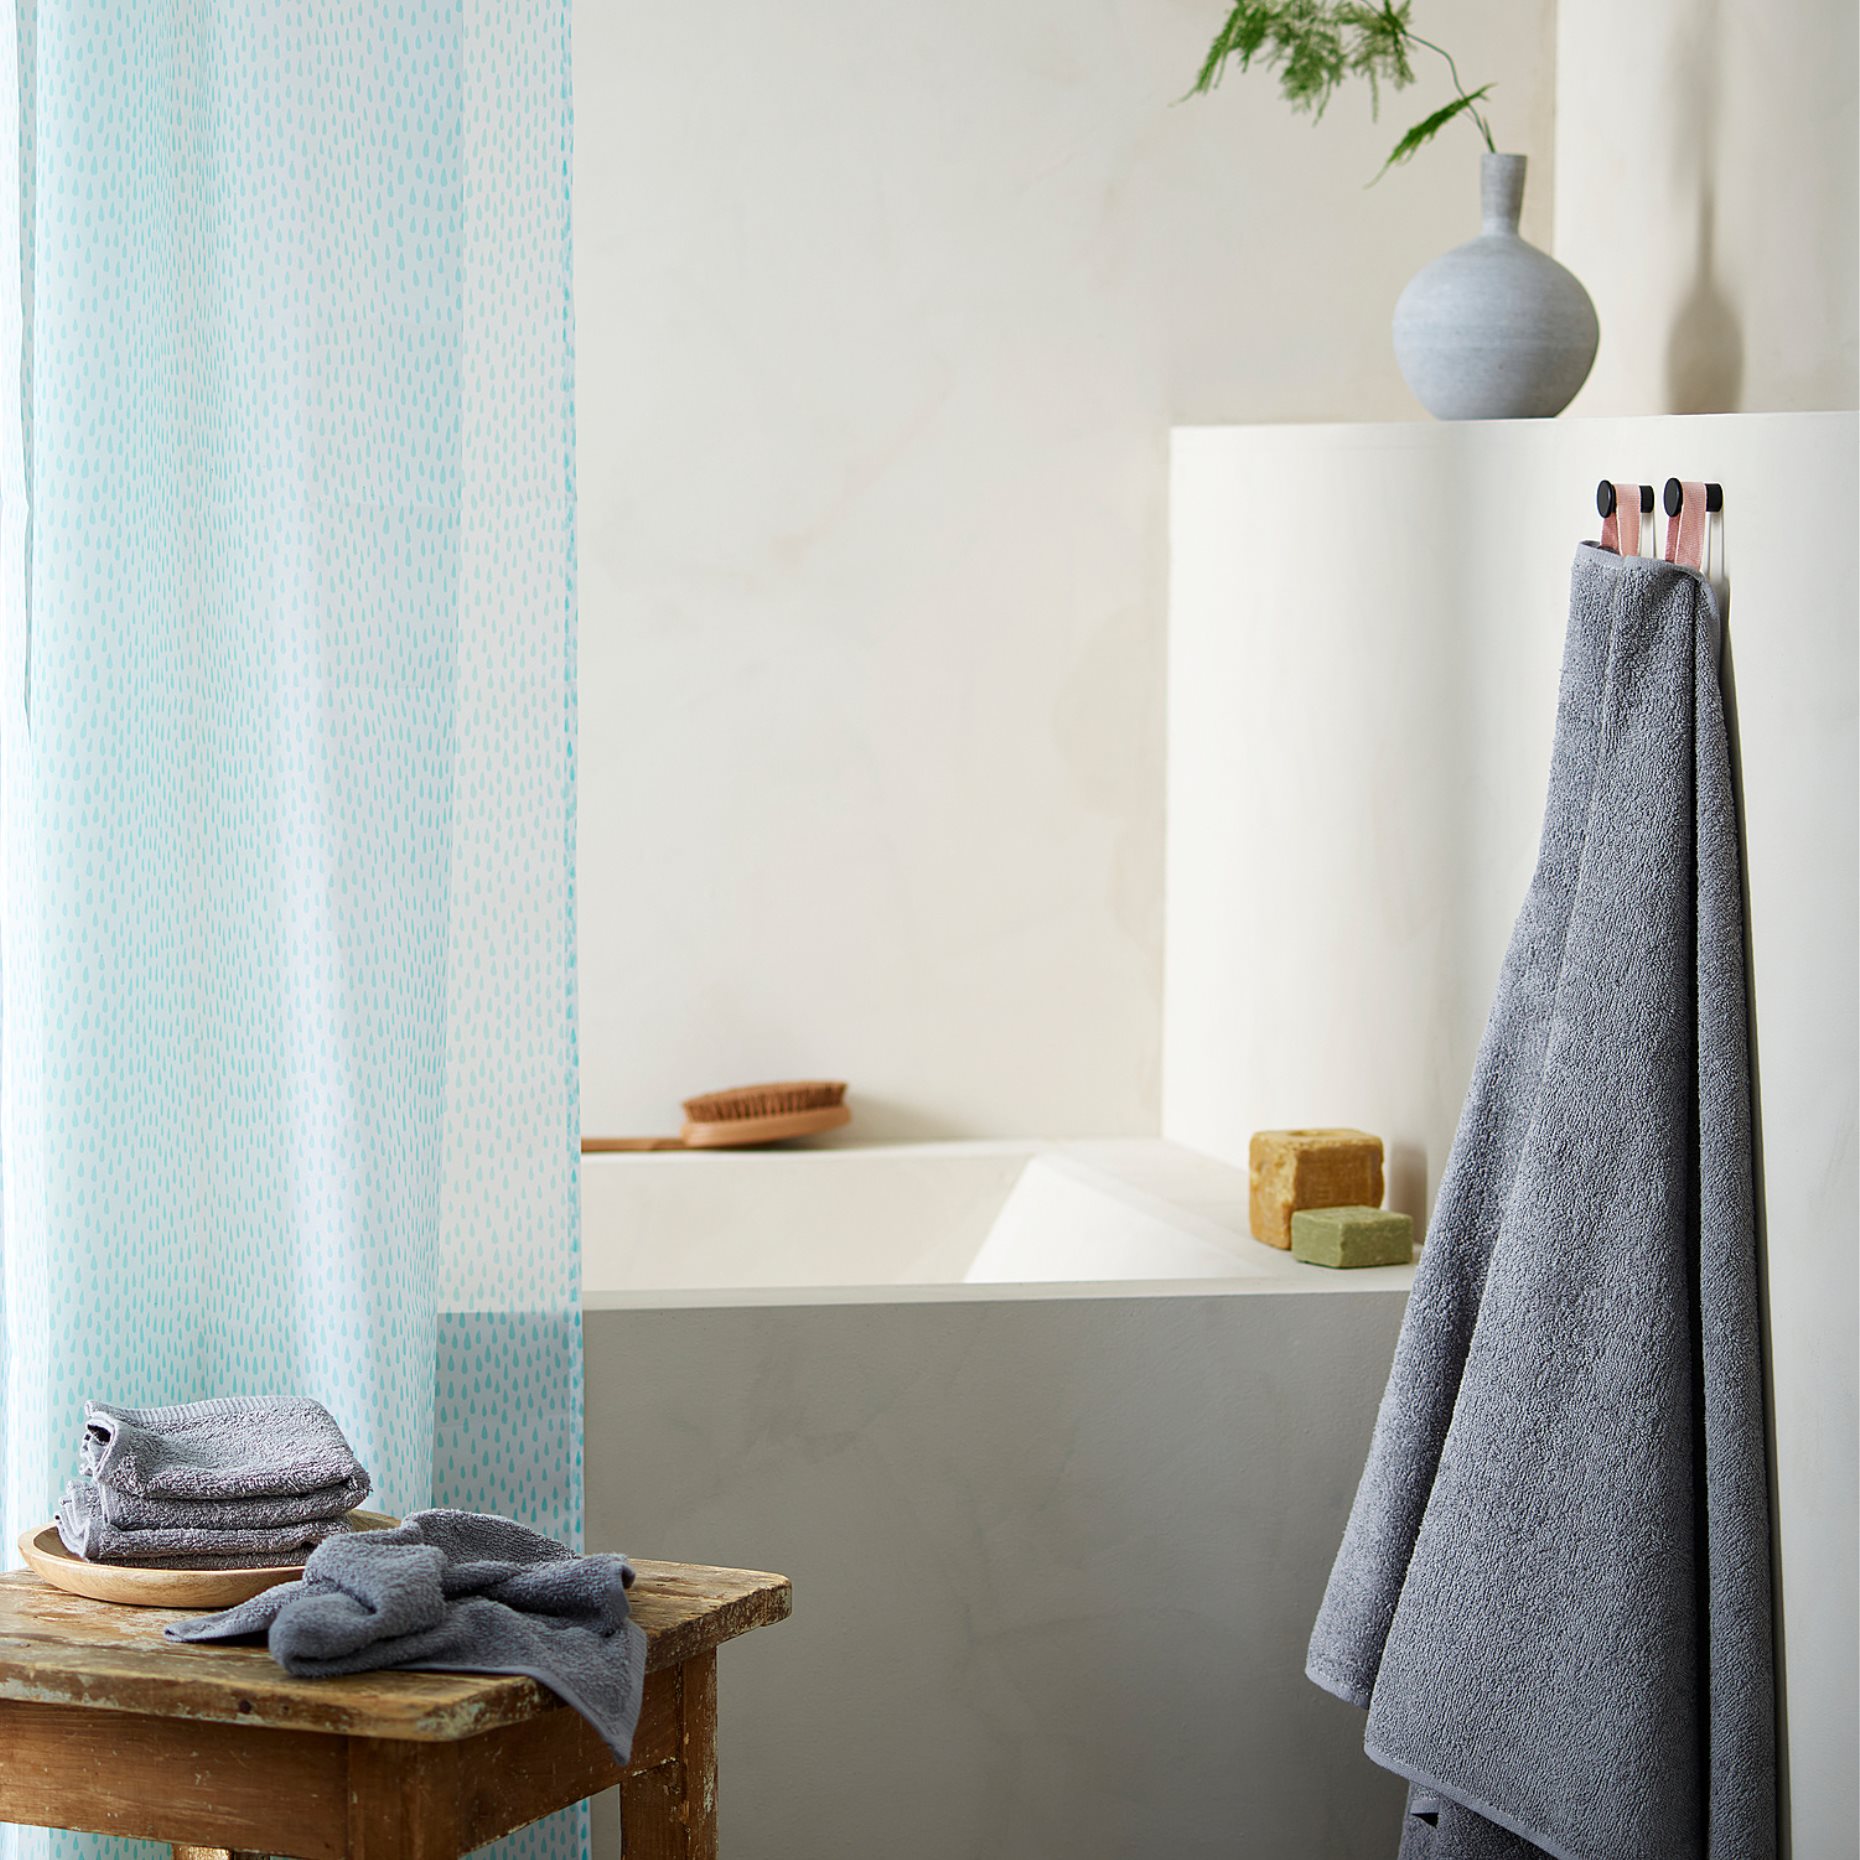 RANEALVEN, shower curtain, 180x200 cm, 505.128.52